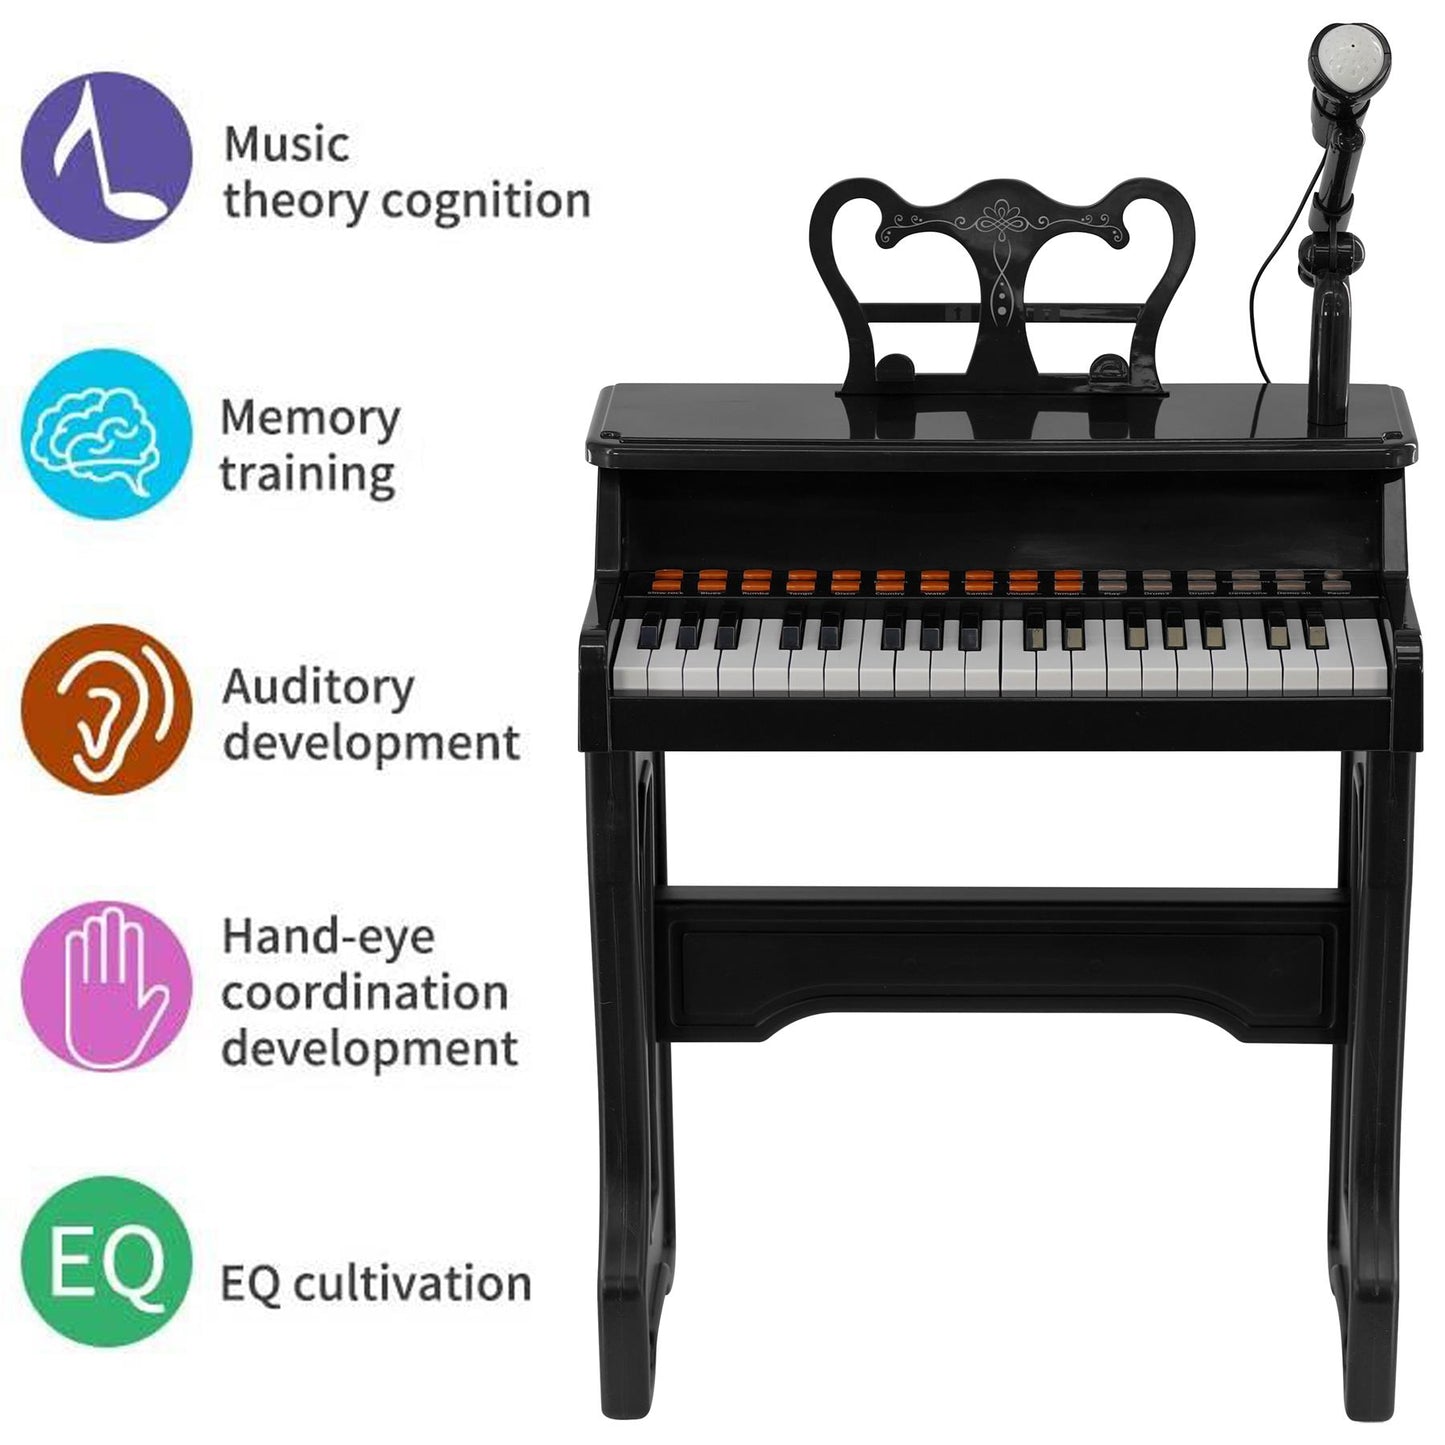 Kids Piano Electronic Keyboard 37 Keys by The Magic Toy Shop - UKBuyZone